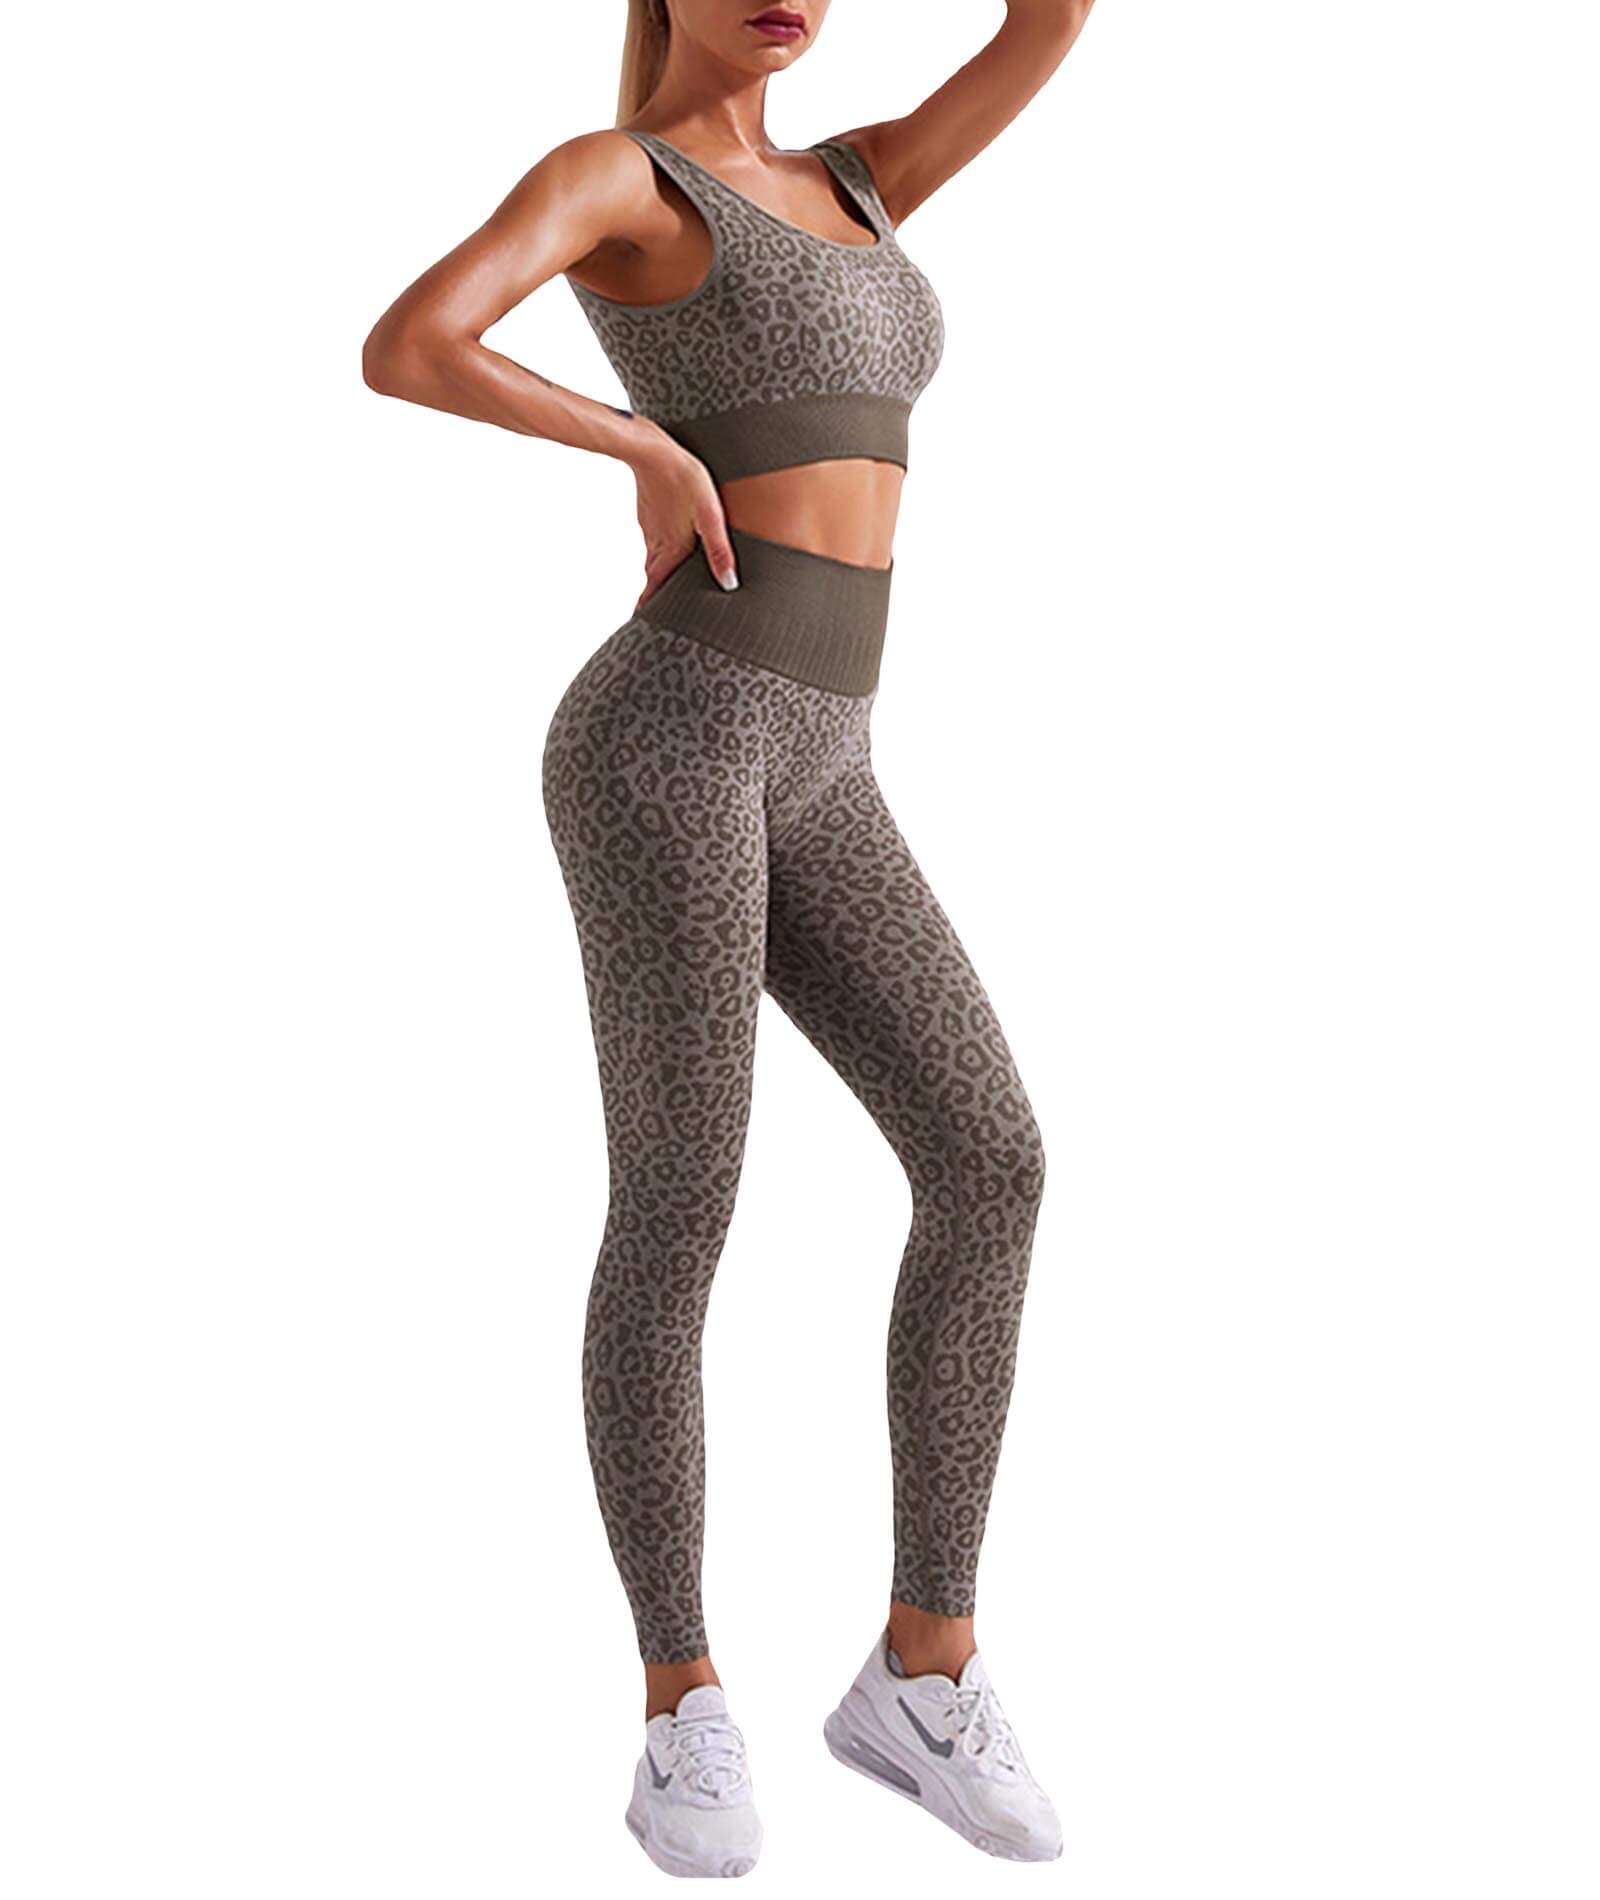  Women's Leopard Print Seamless Workout Set Animal Speckle High Impact Athletic Bra Butt Lift Sports Legging